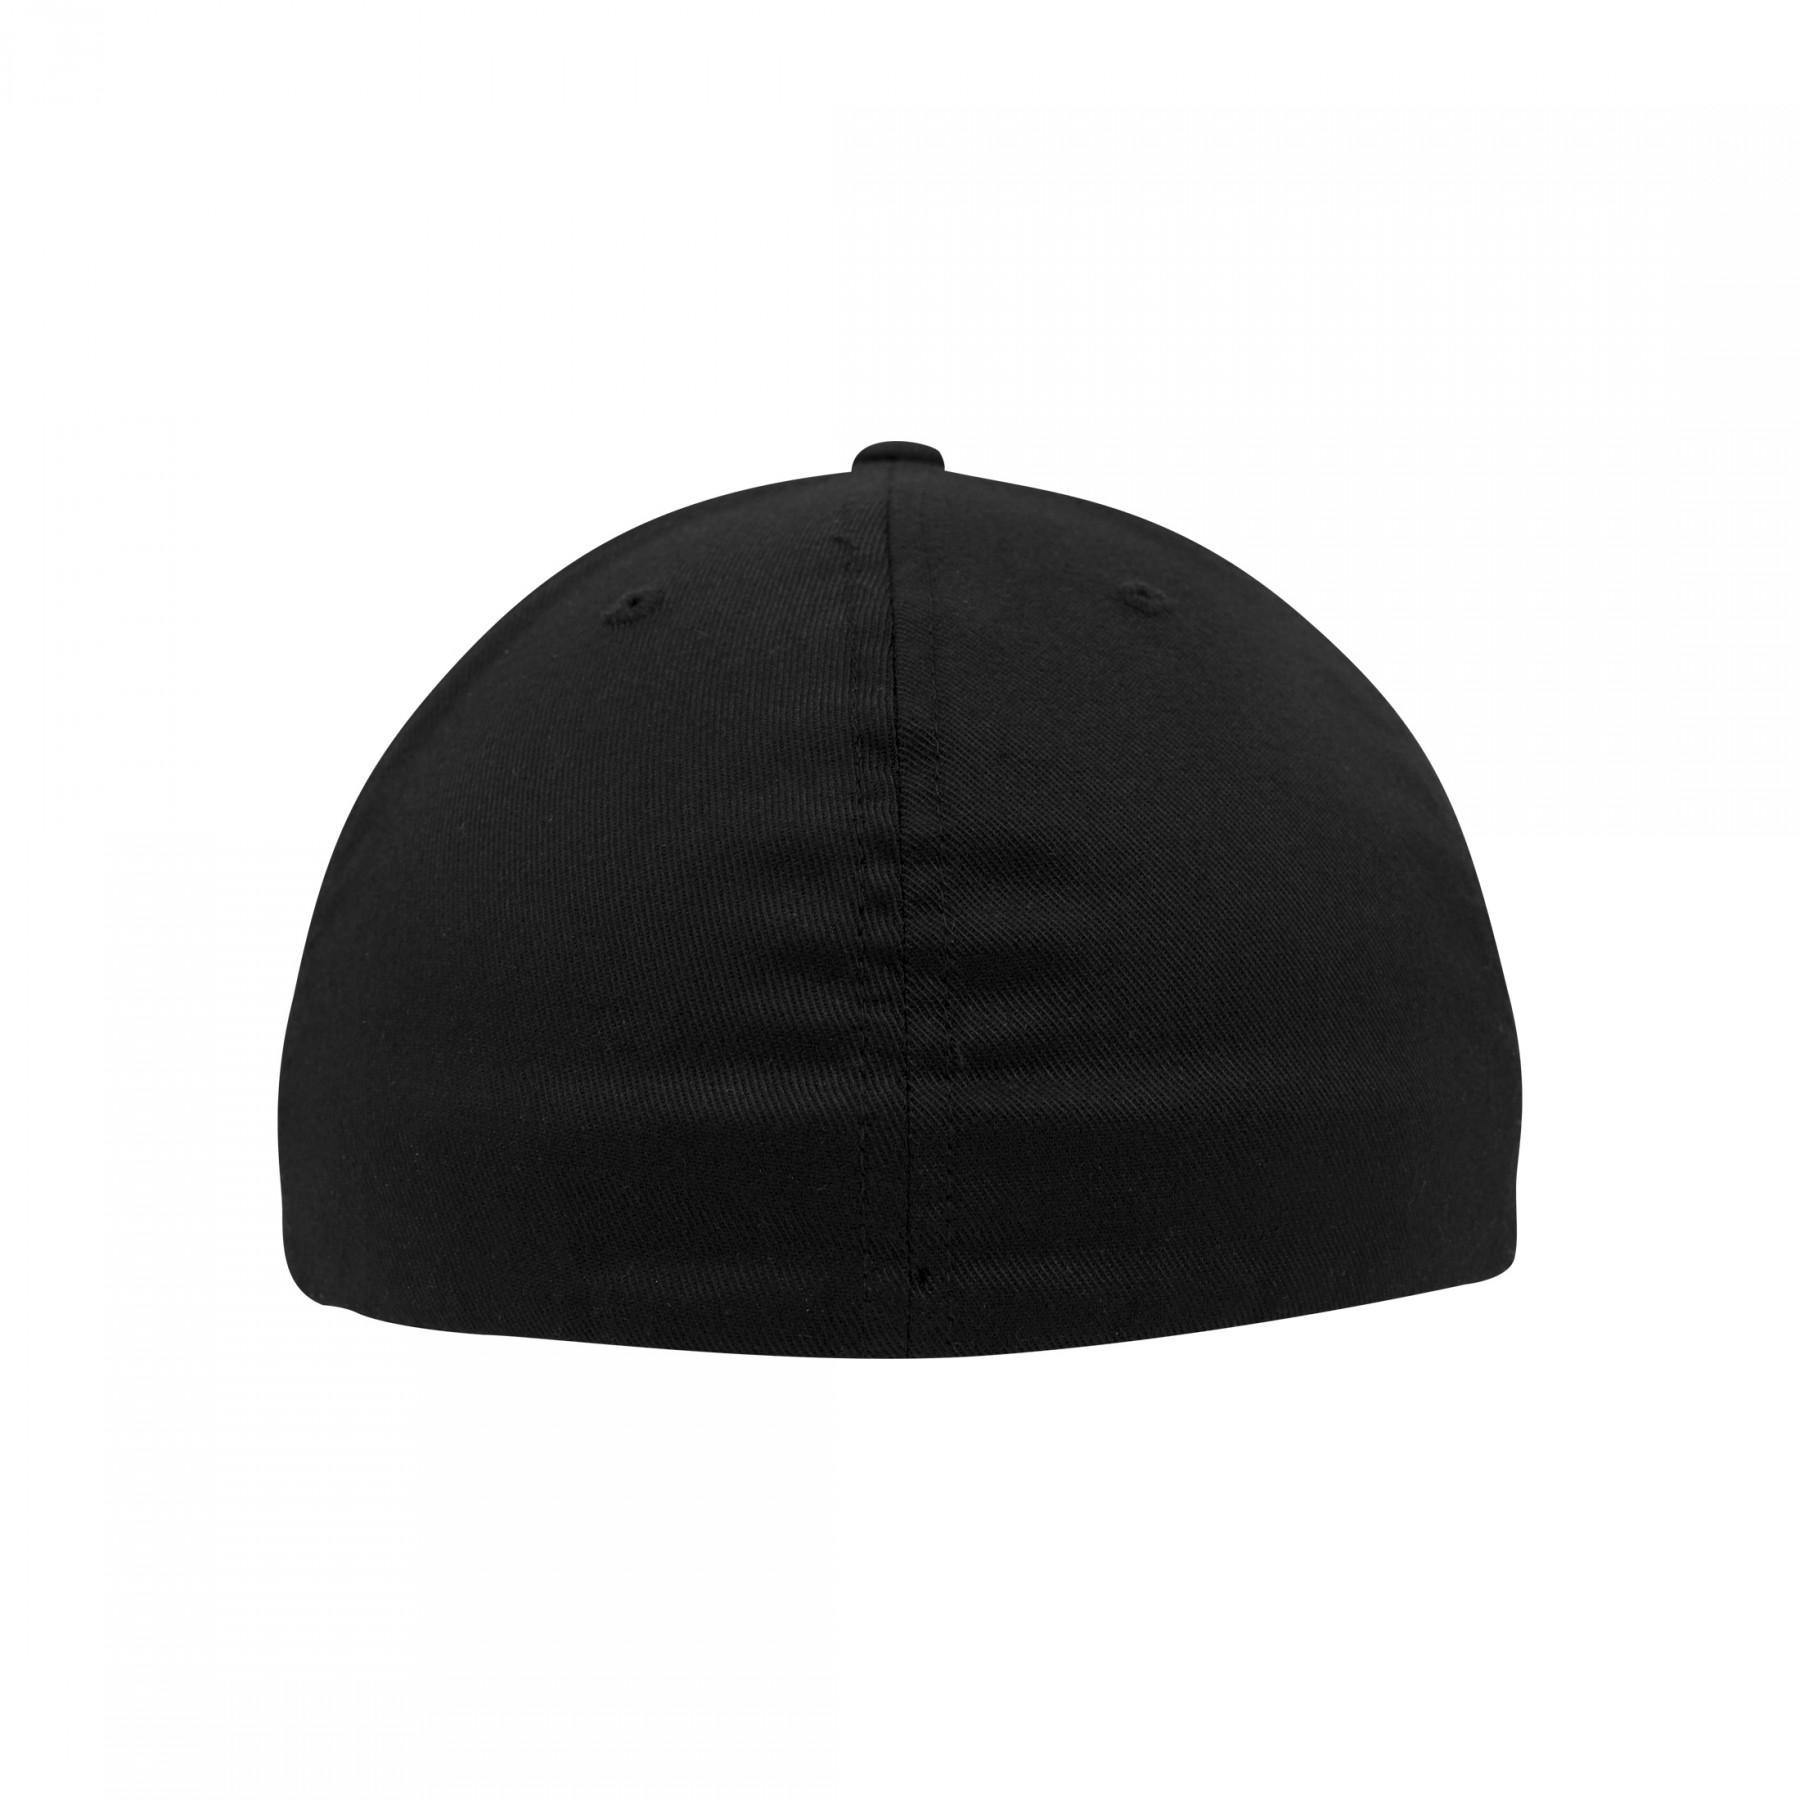 Cap Flexfit flat visor